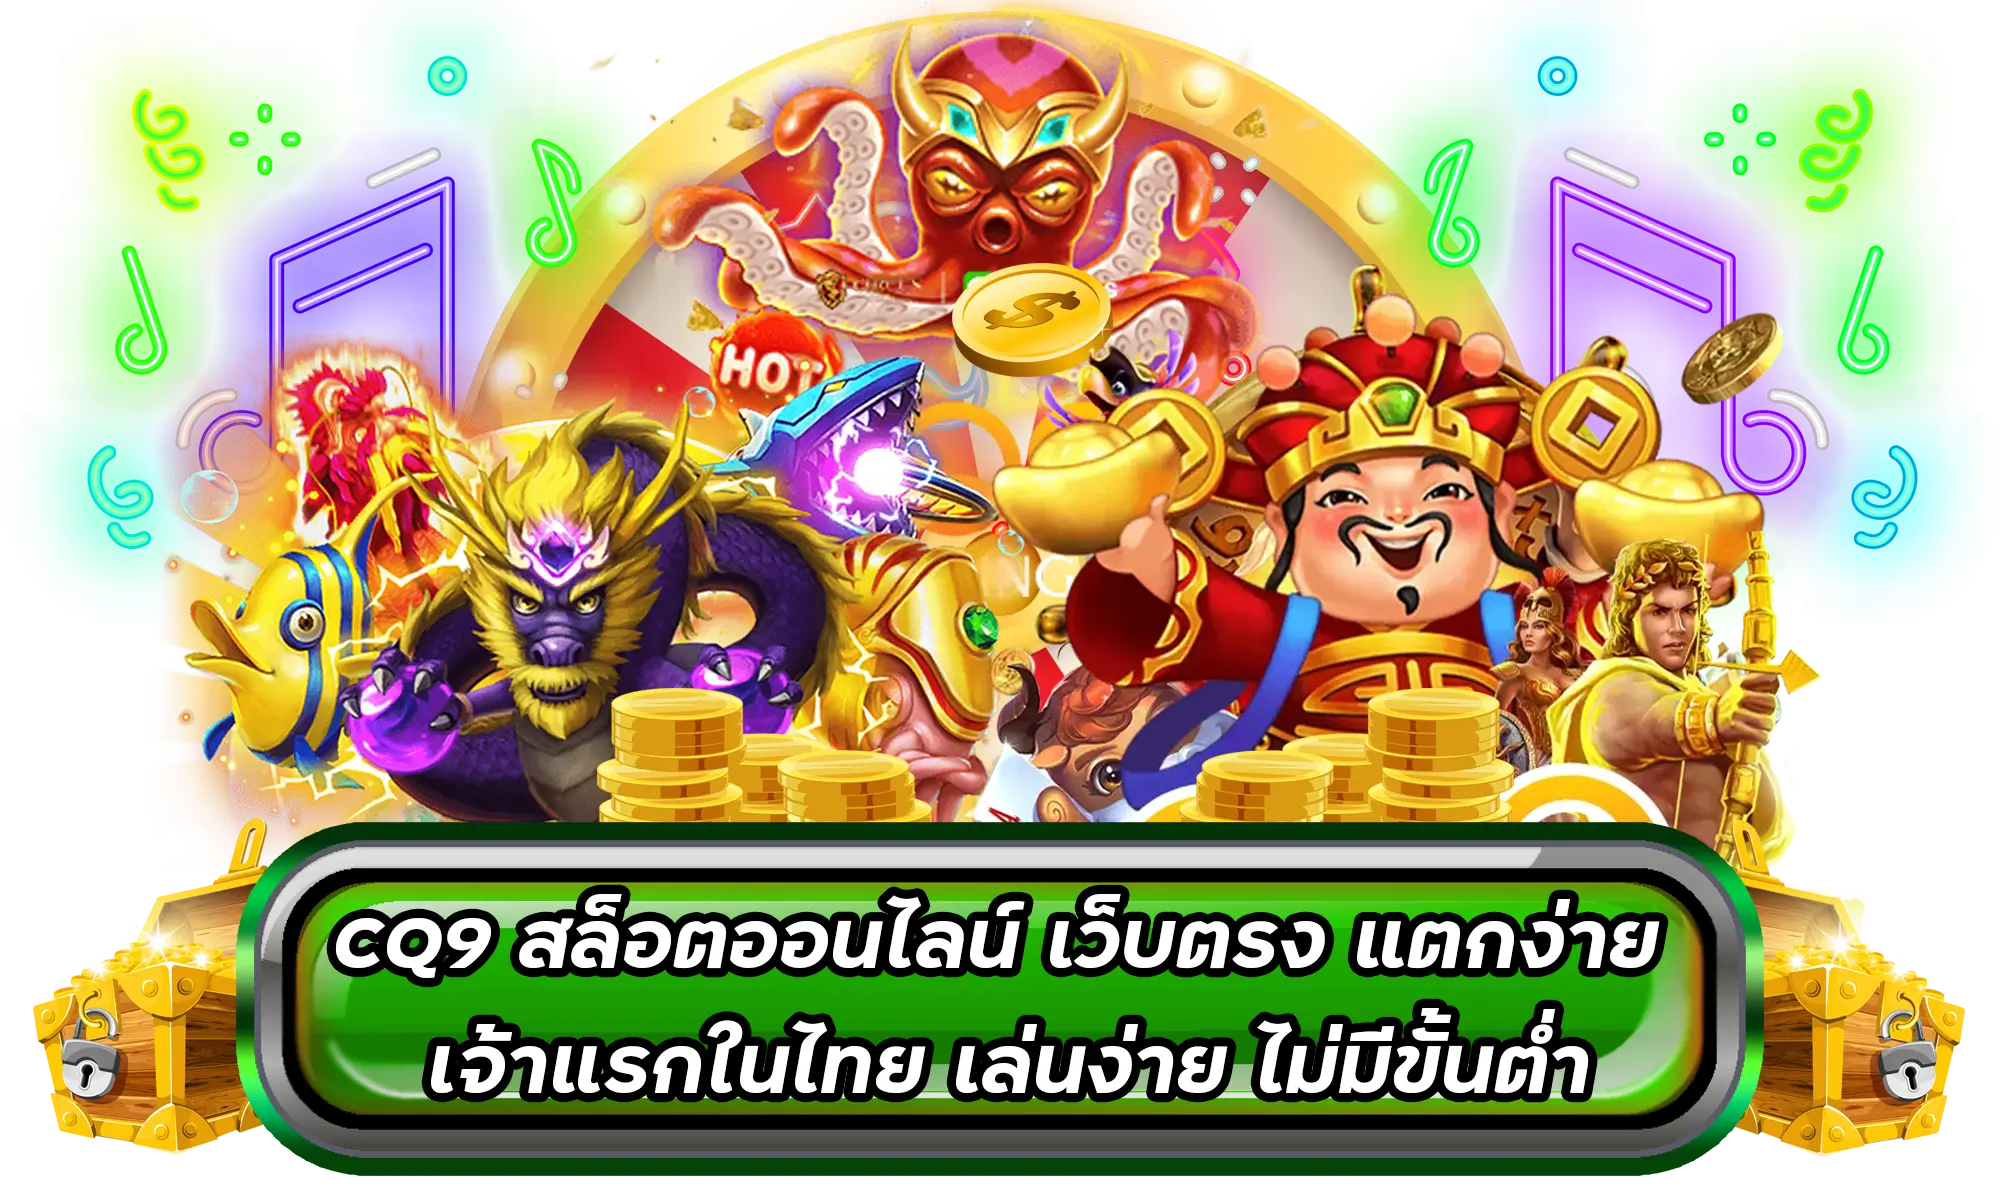 CQ9 สล็อตออนไลน์ เว็บตรง แตกง่าย เจ้าแรกในไทย เล่นง่าย ไม่มีขั้นต่ำ